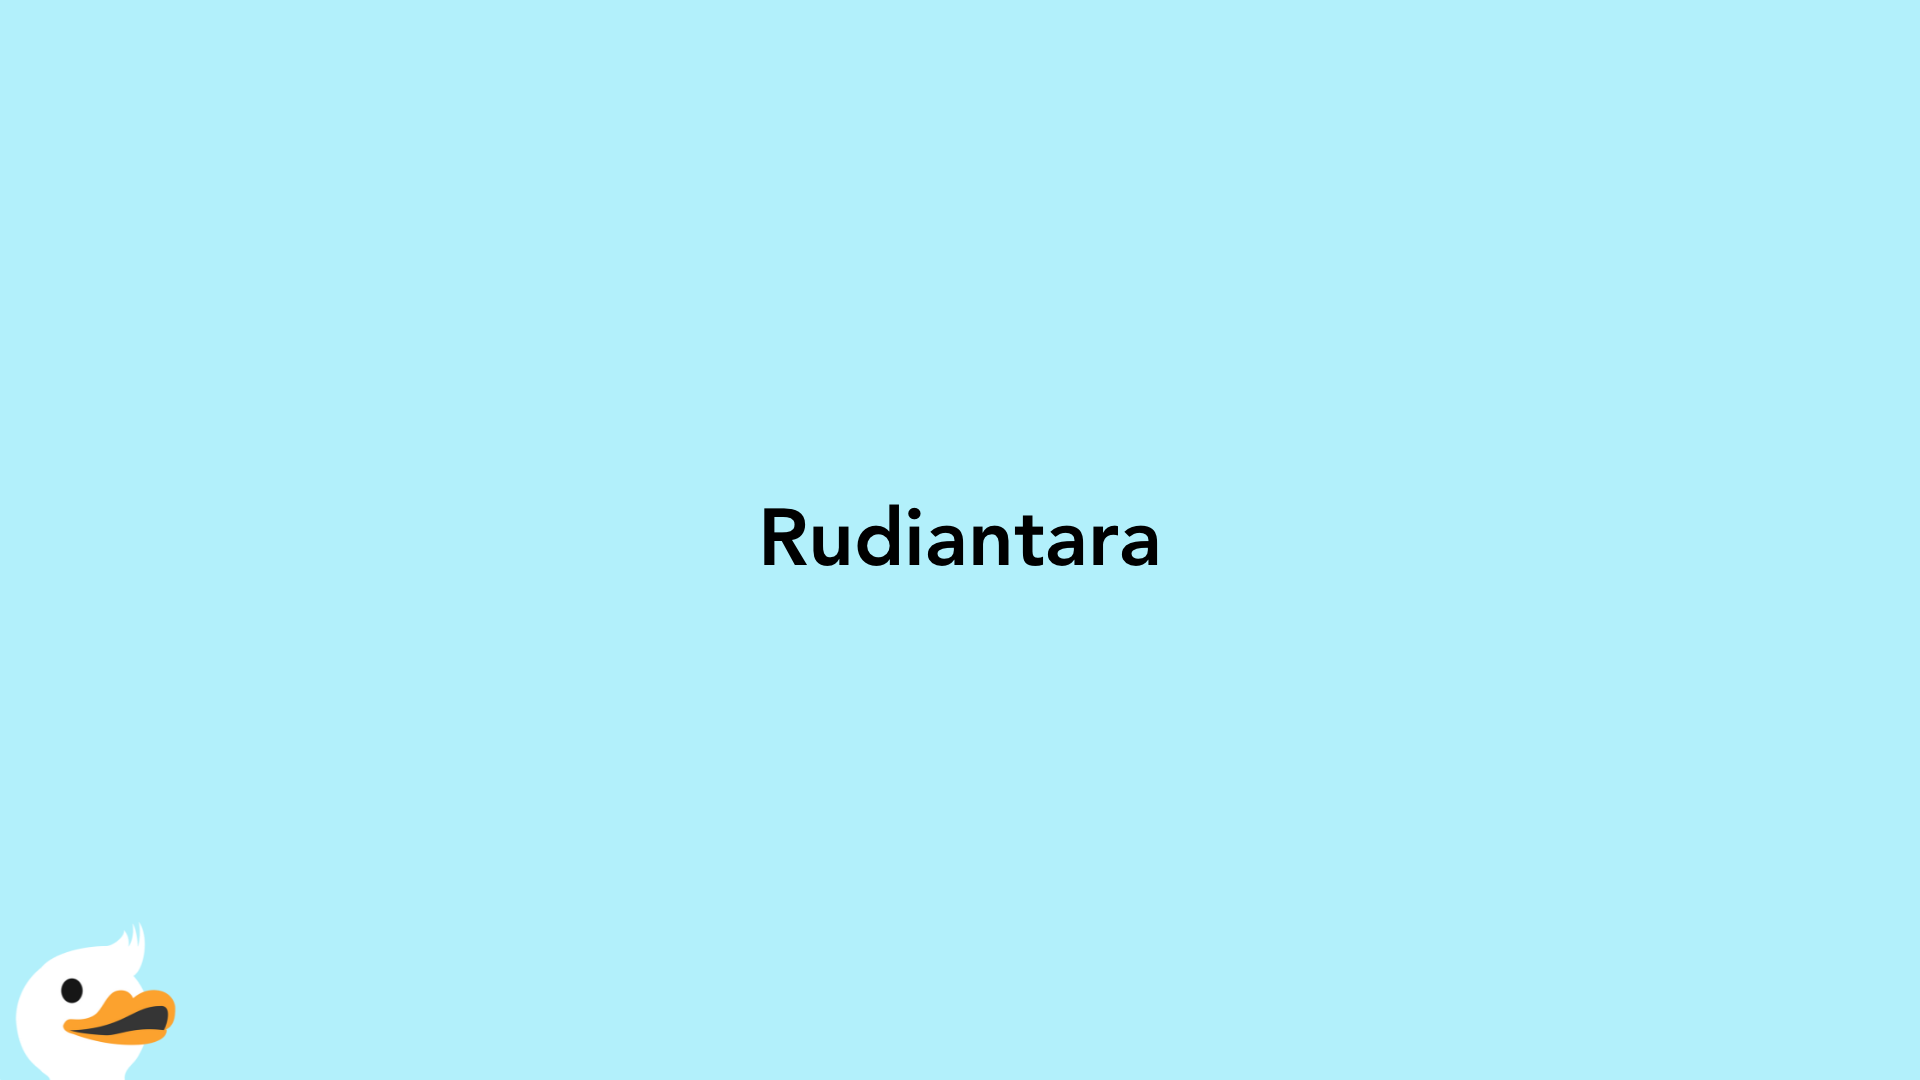 Rudiantara